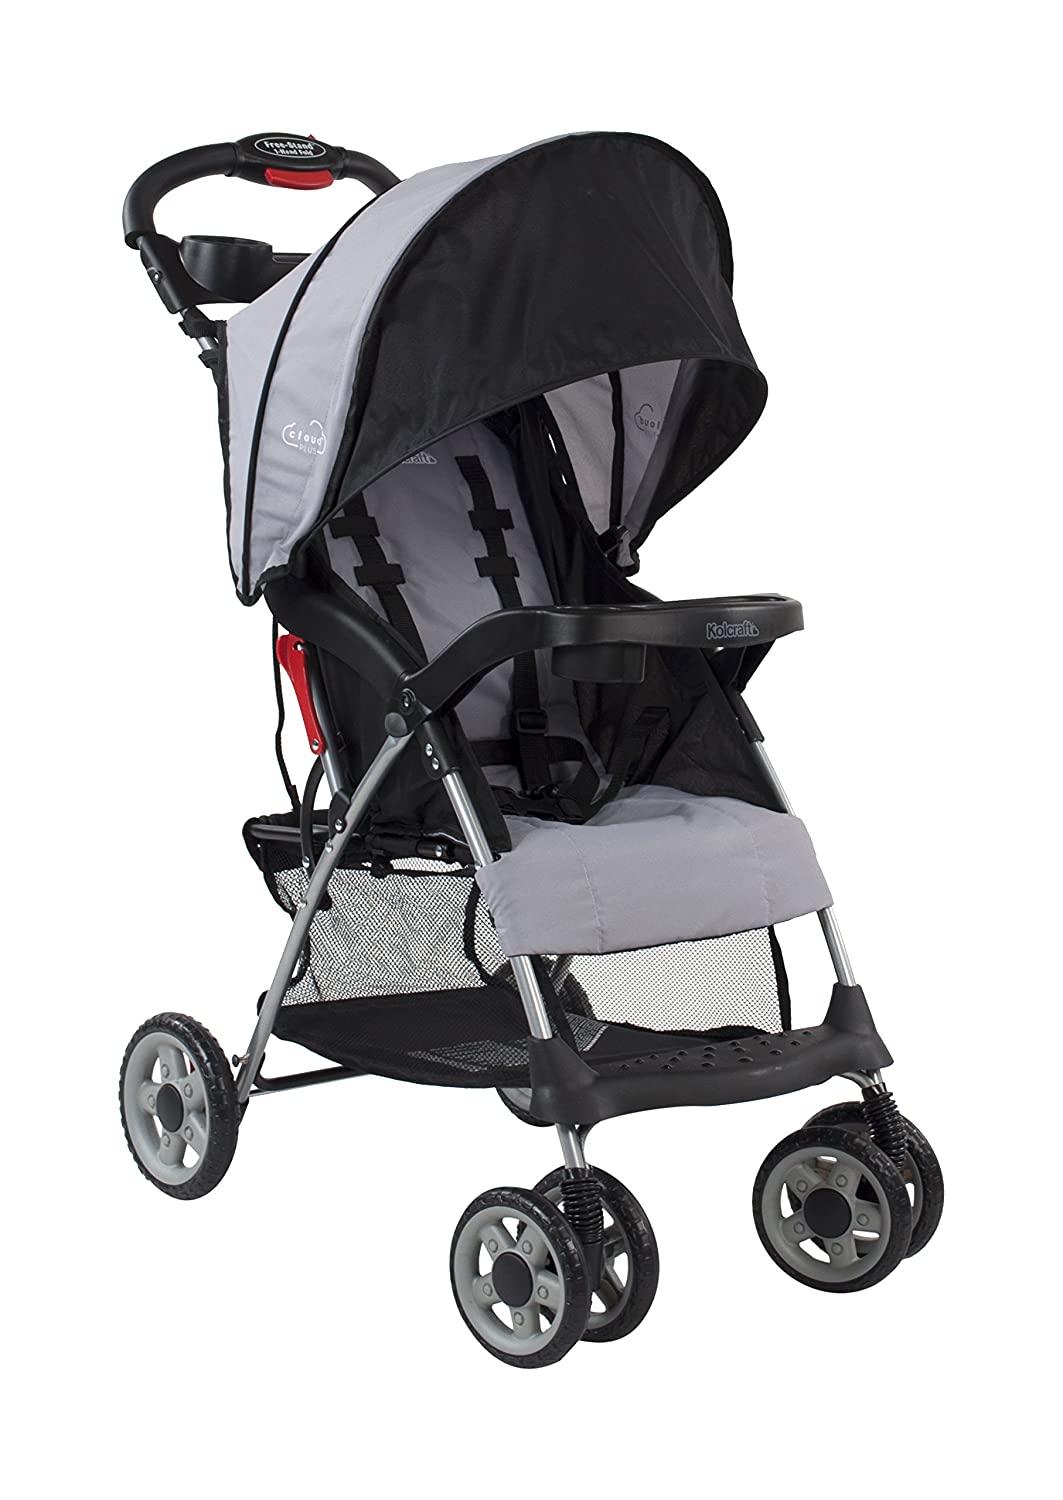 Kolcraft Cloud Plus Lightweight Easy Fold Compact Travel Baby Stroller, Slate Grey